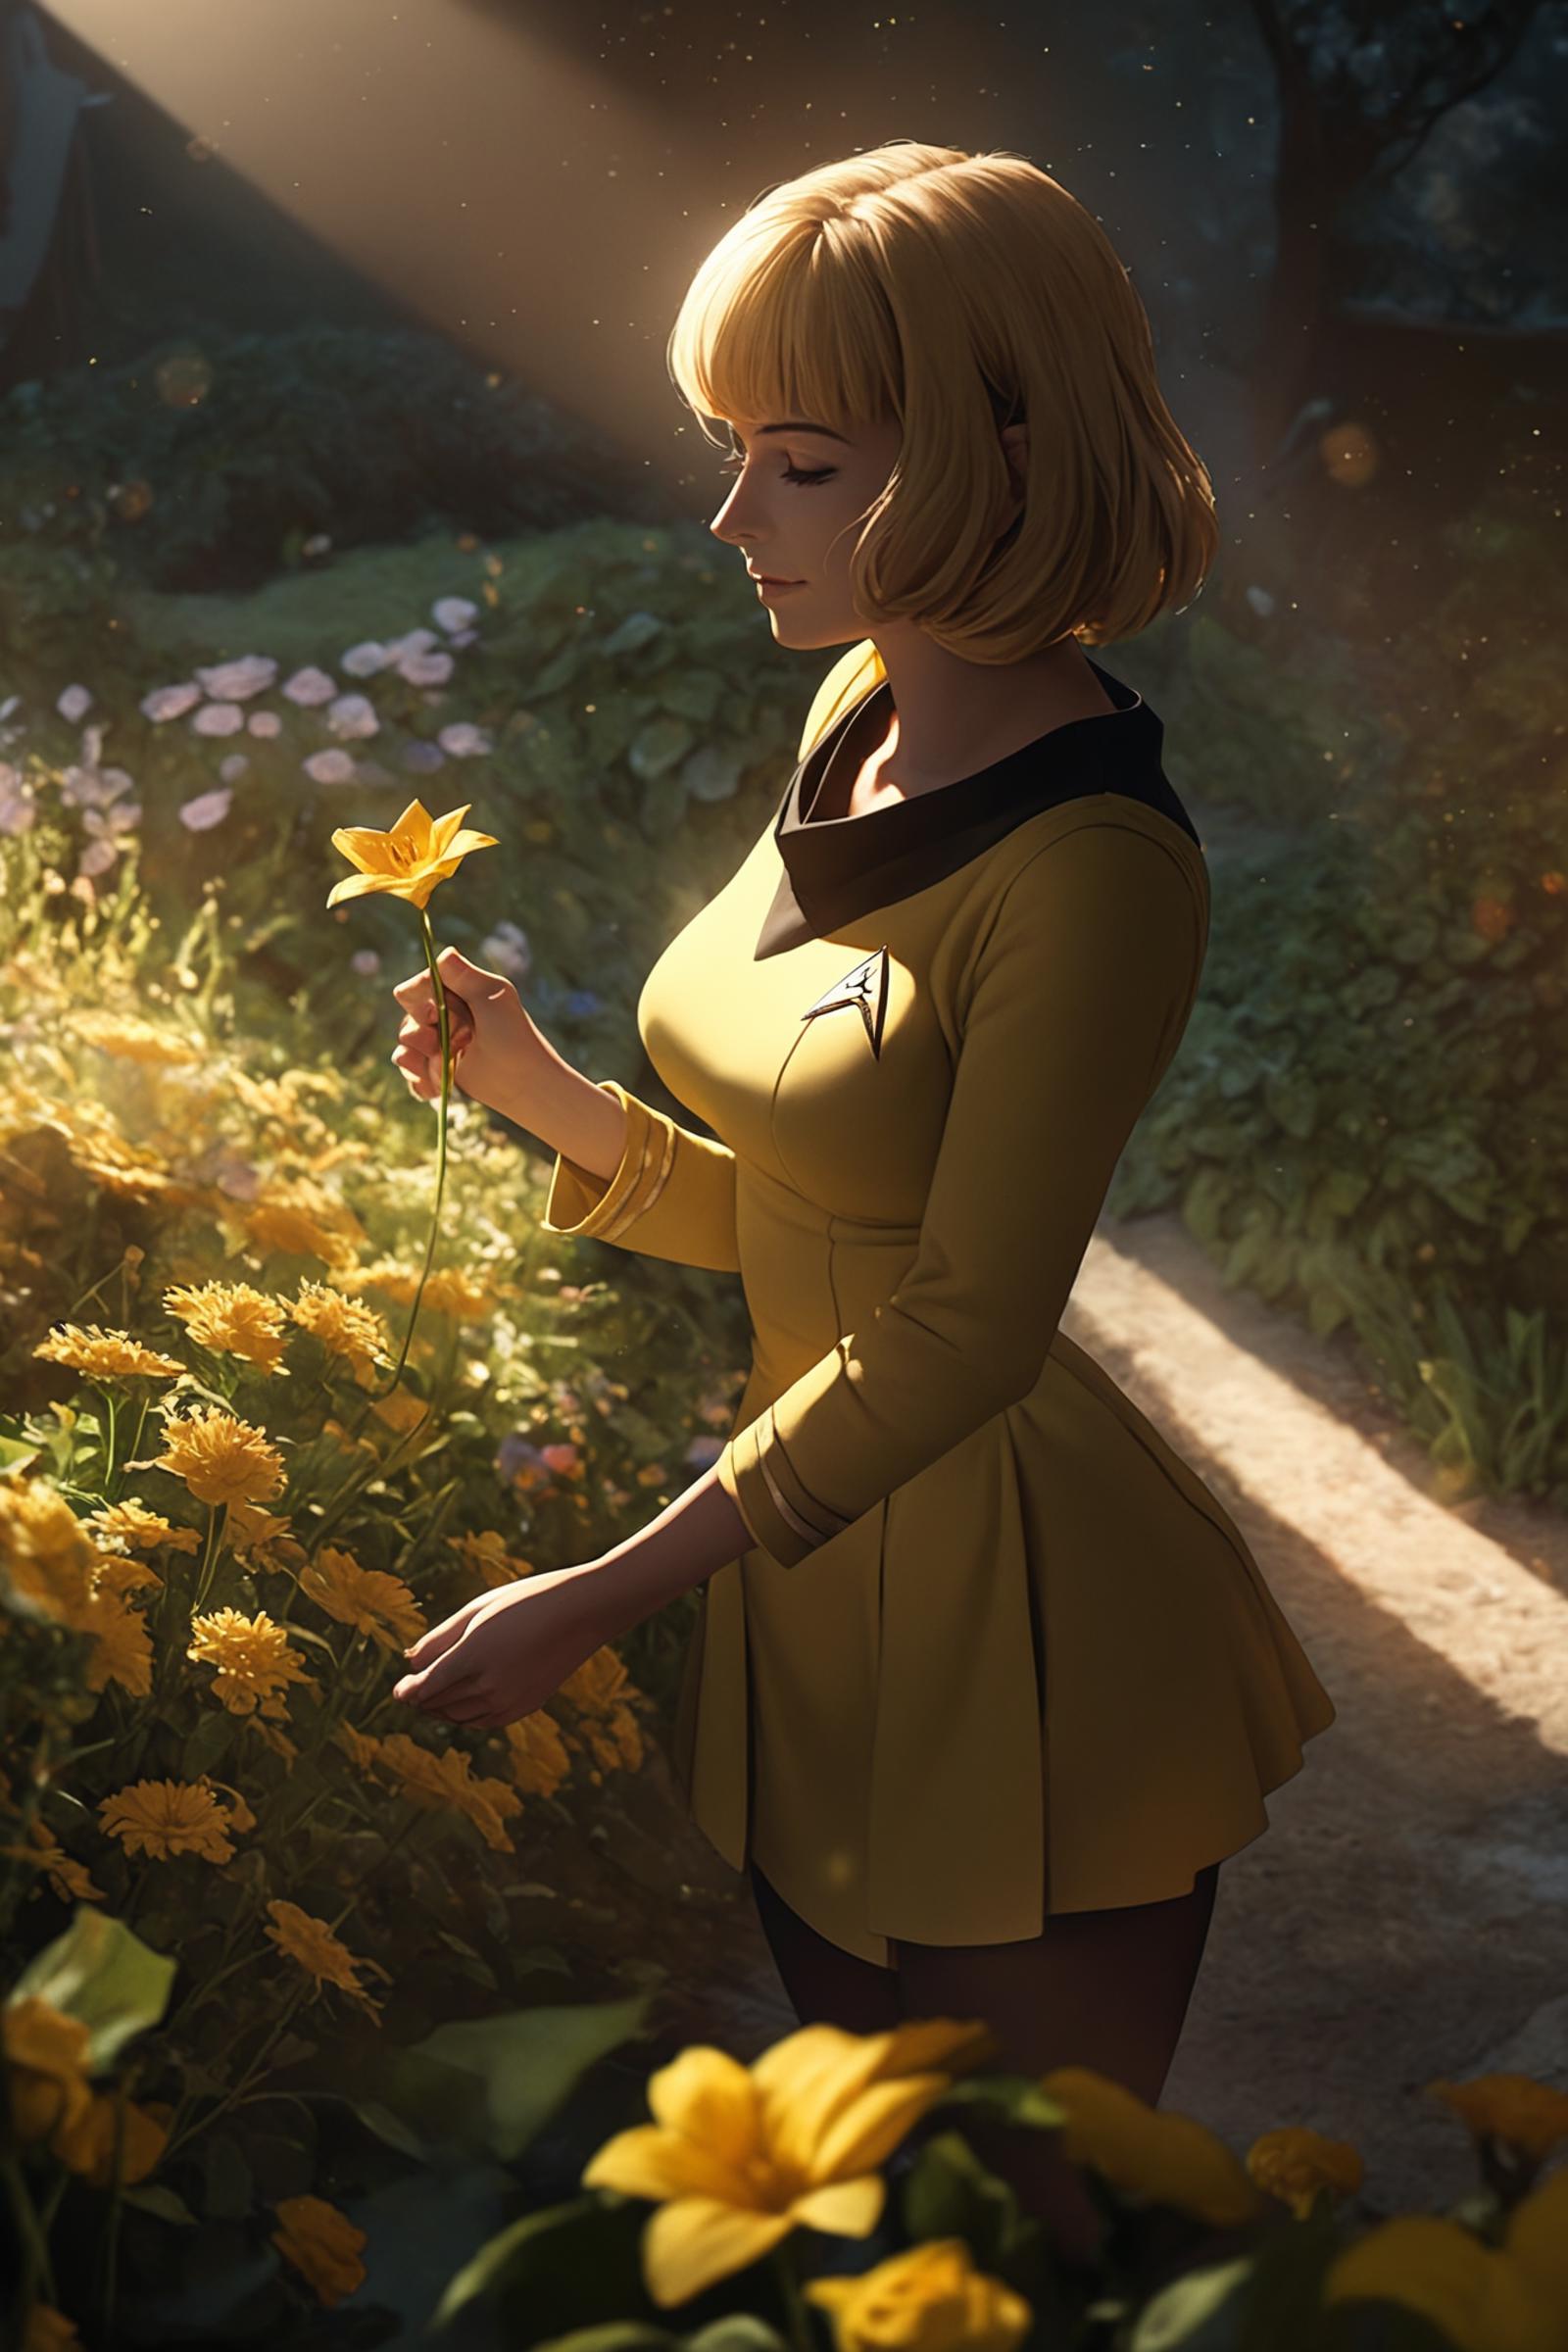 woman in a (yellow startrektos dress:1.1) admiring a flower in a garden,star trek badge,
masterpiece, best quality, soft l...